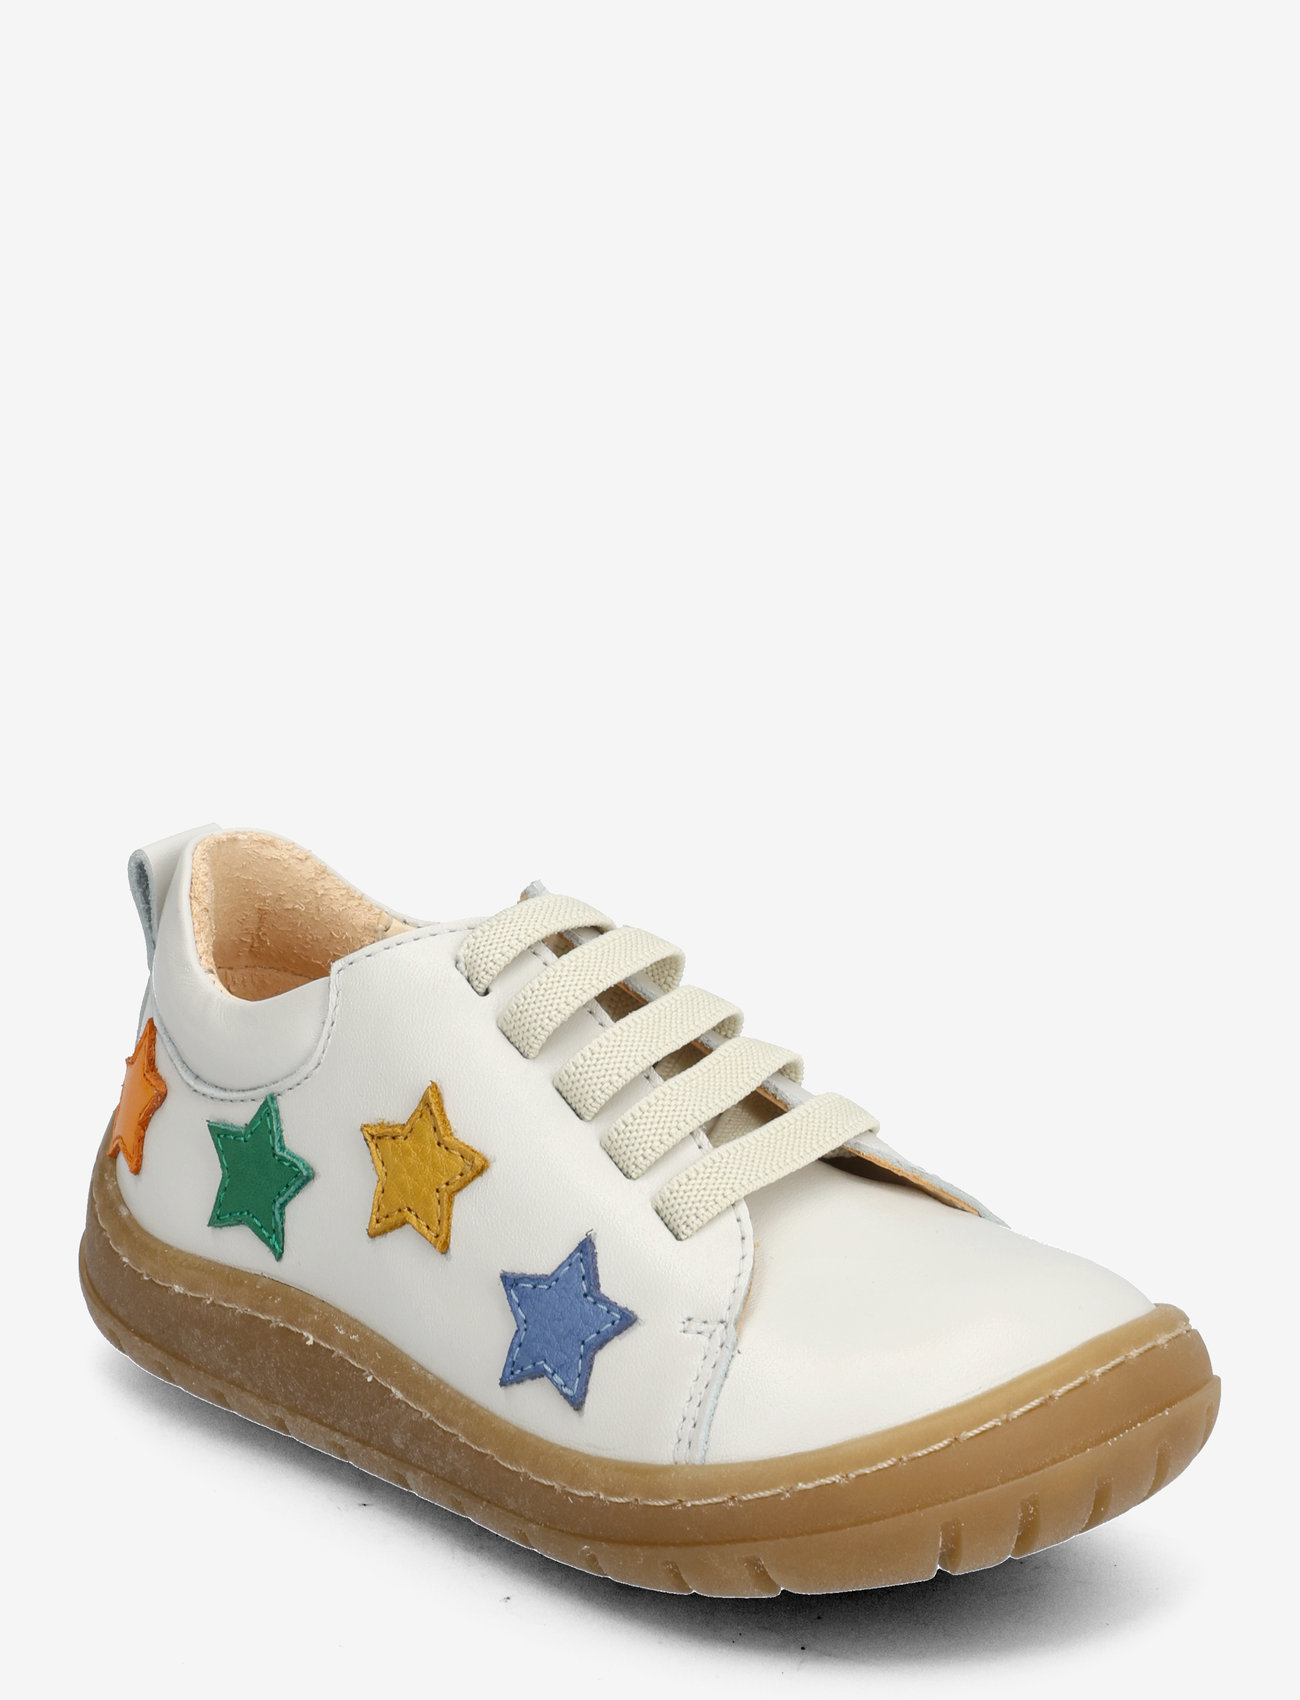 ANGULUS - Shoes - flat - with lace - kesälöytöjä - 1493/a006 off white/stars - 0